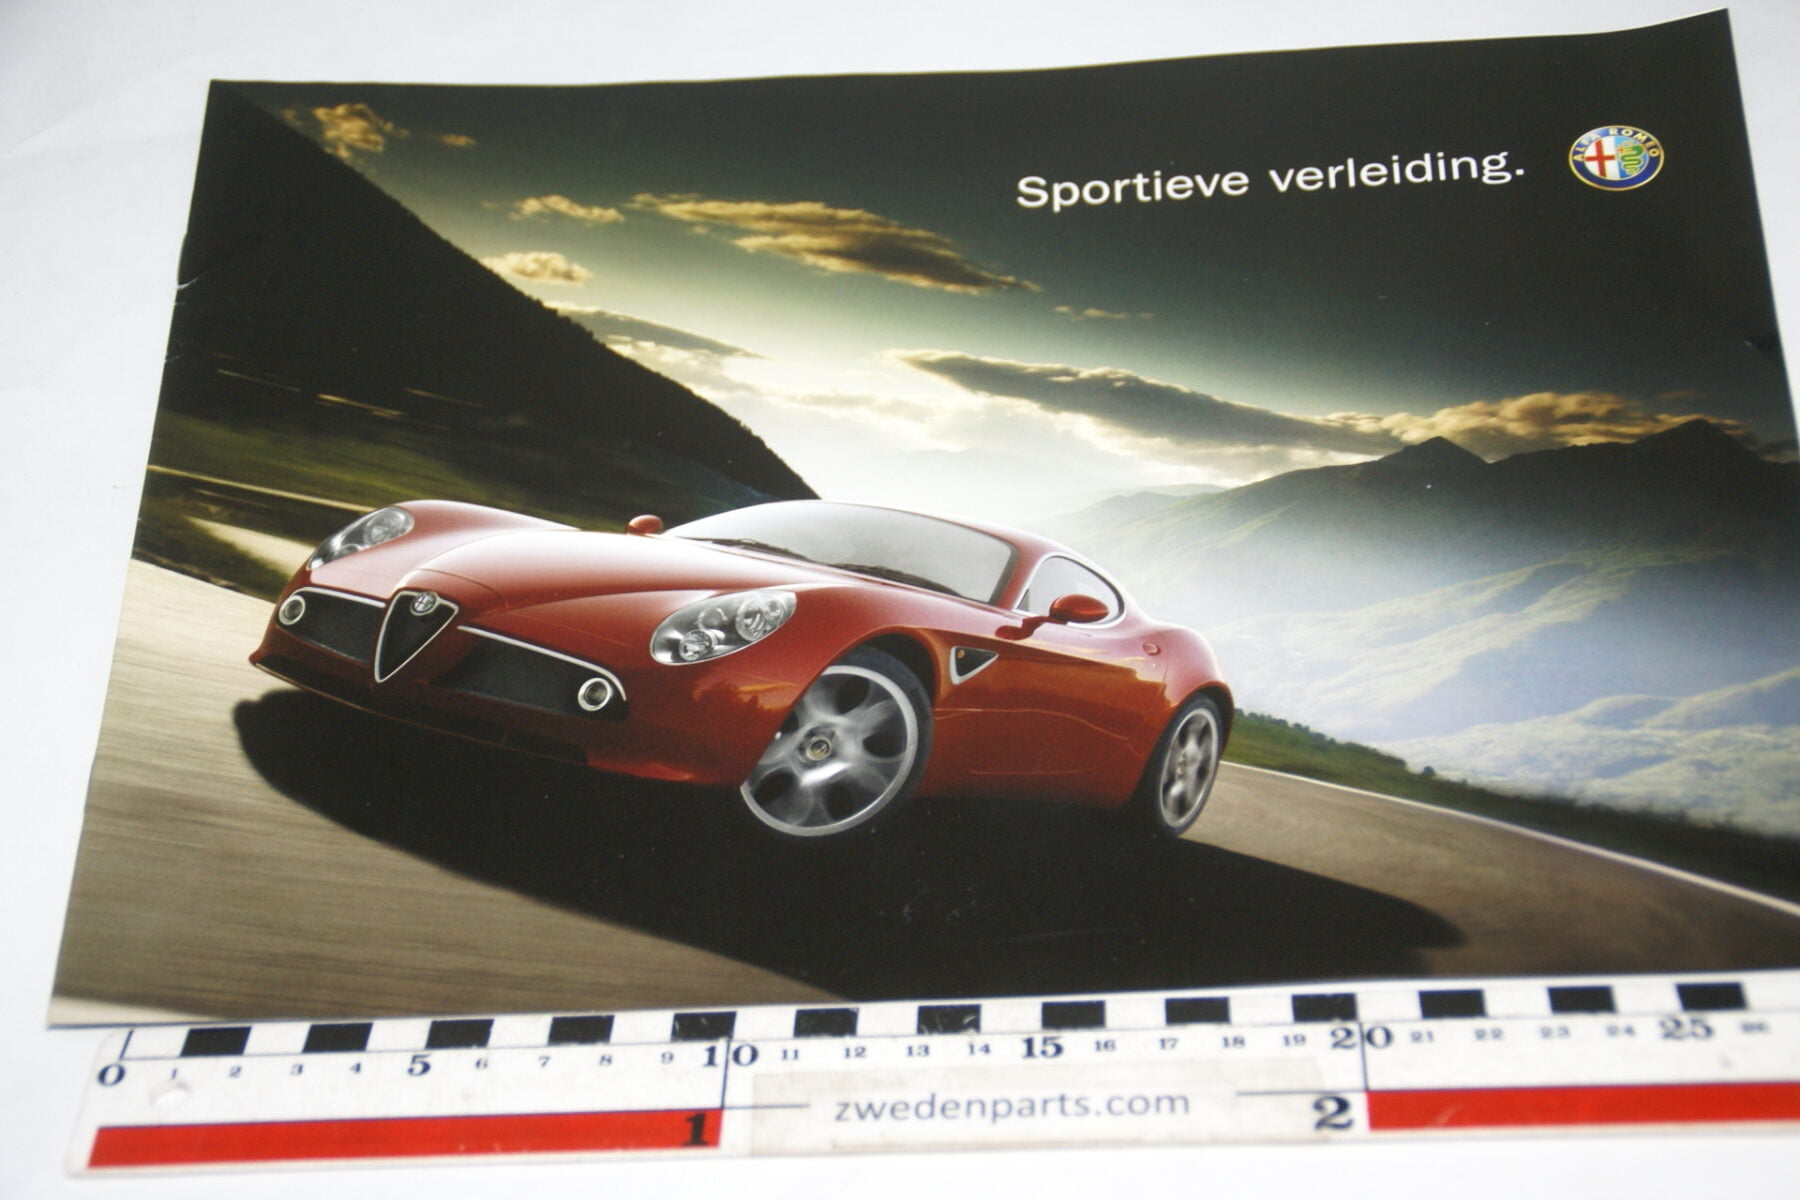 DSC05520 200703 brochure Alfa Romeo Sportieve verleiding